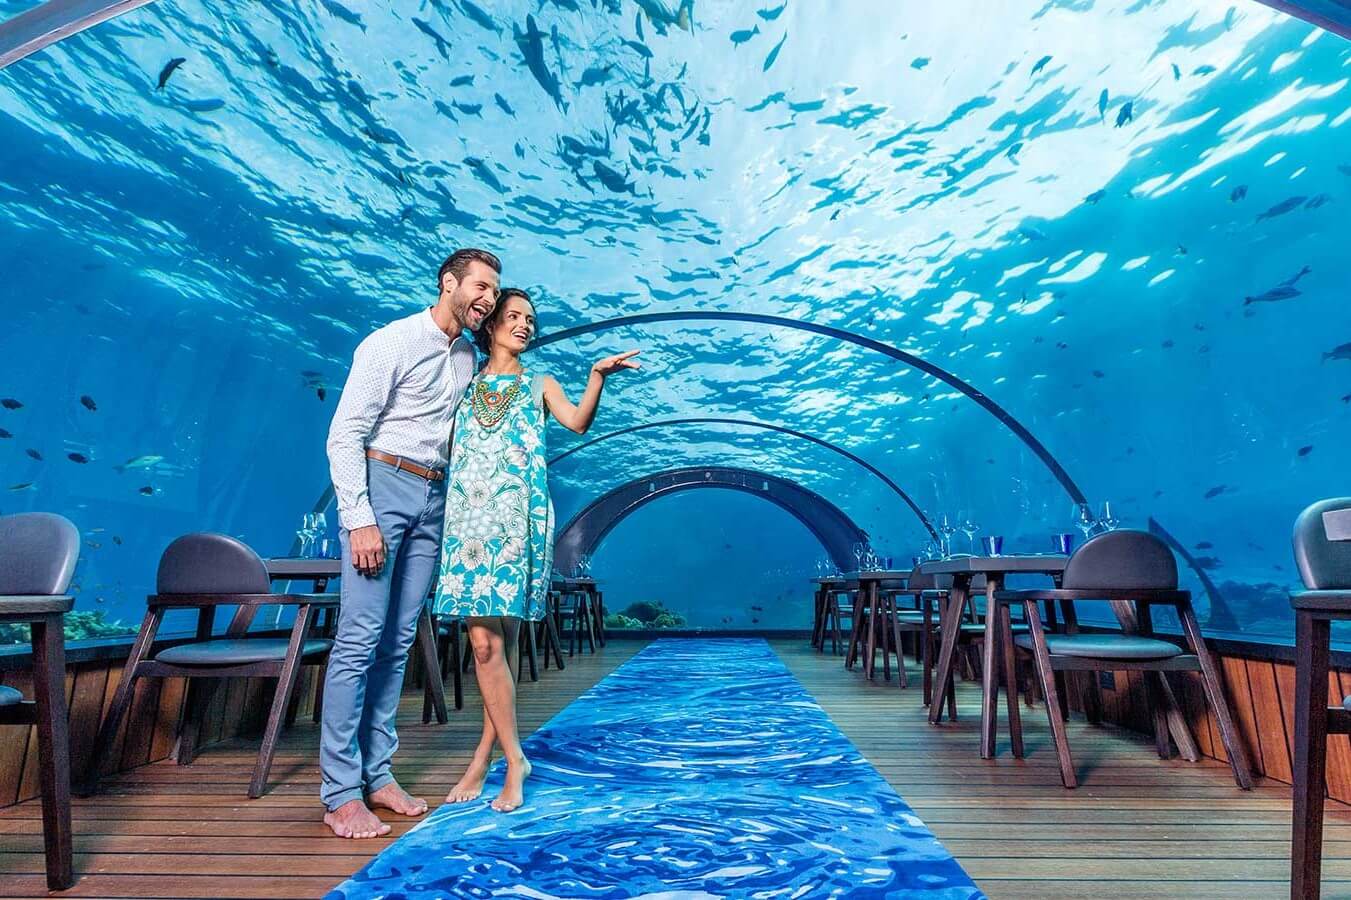 Maldives hotels that offer dinner at an underwater restaurant